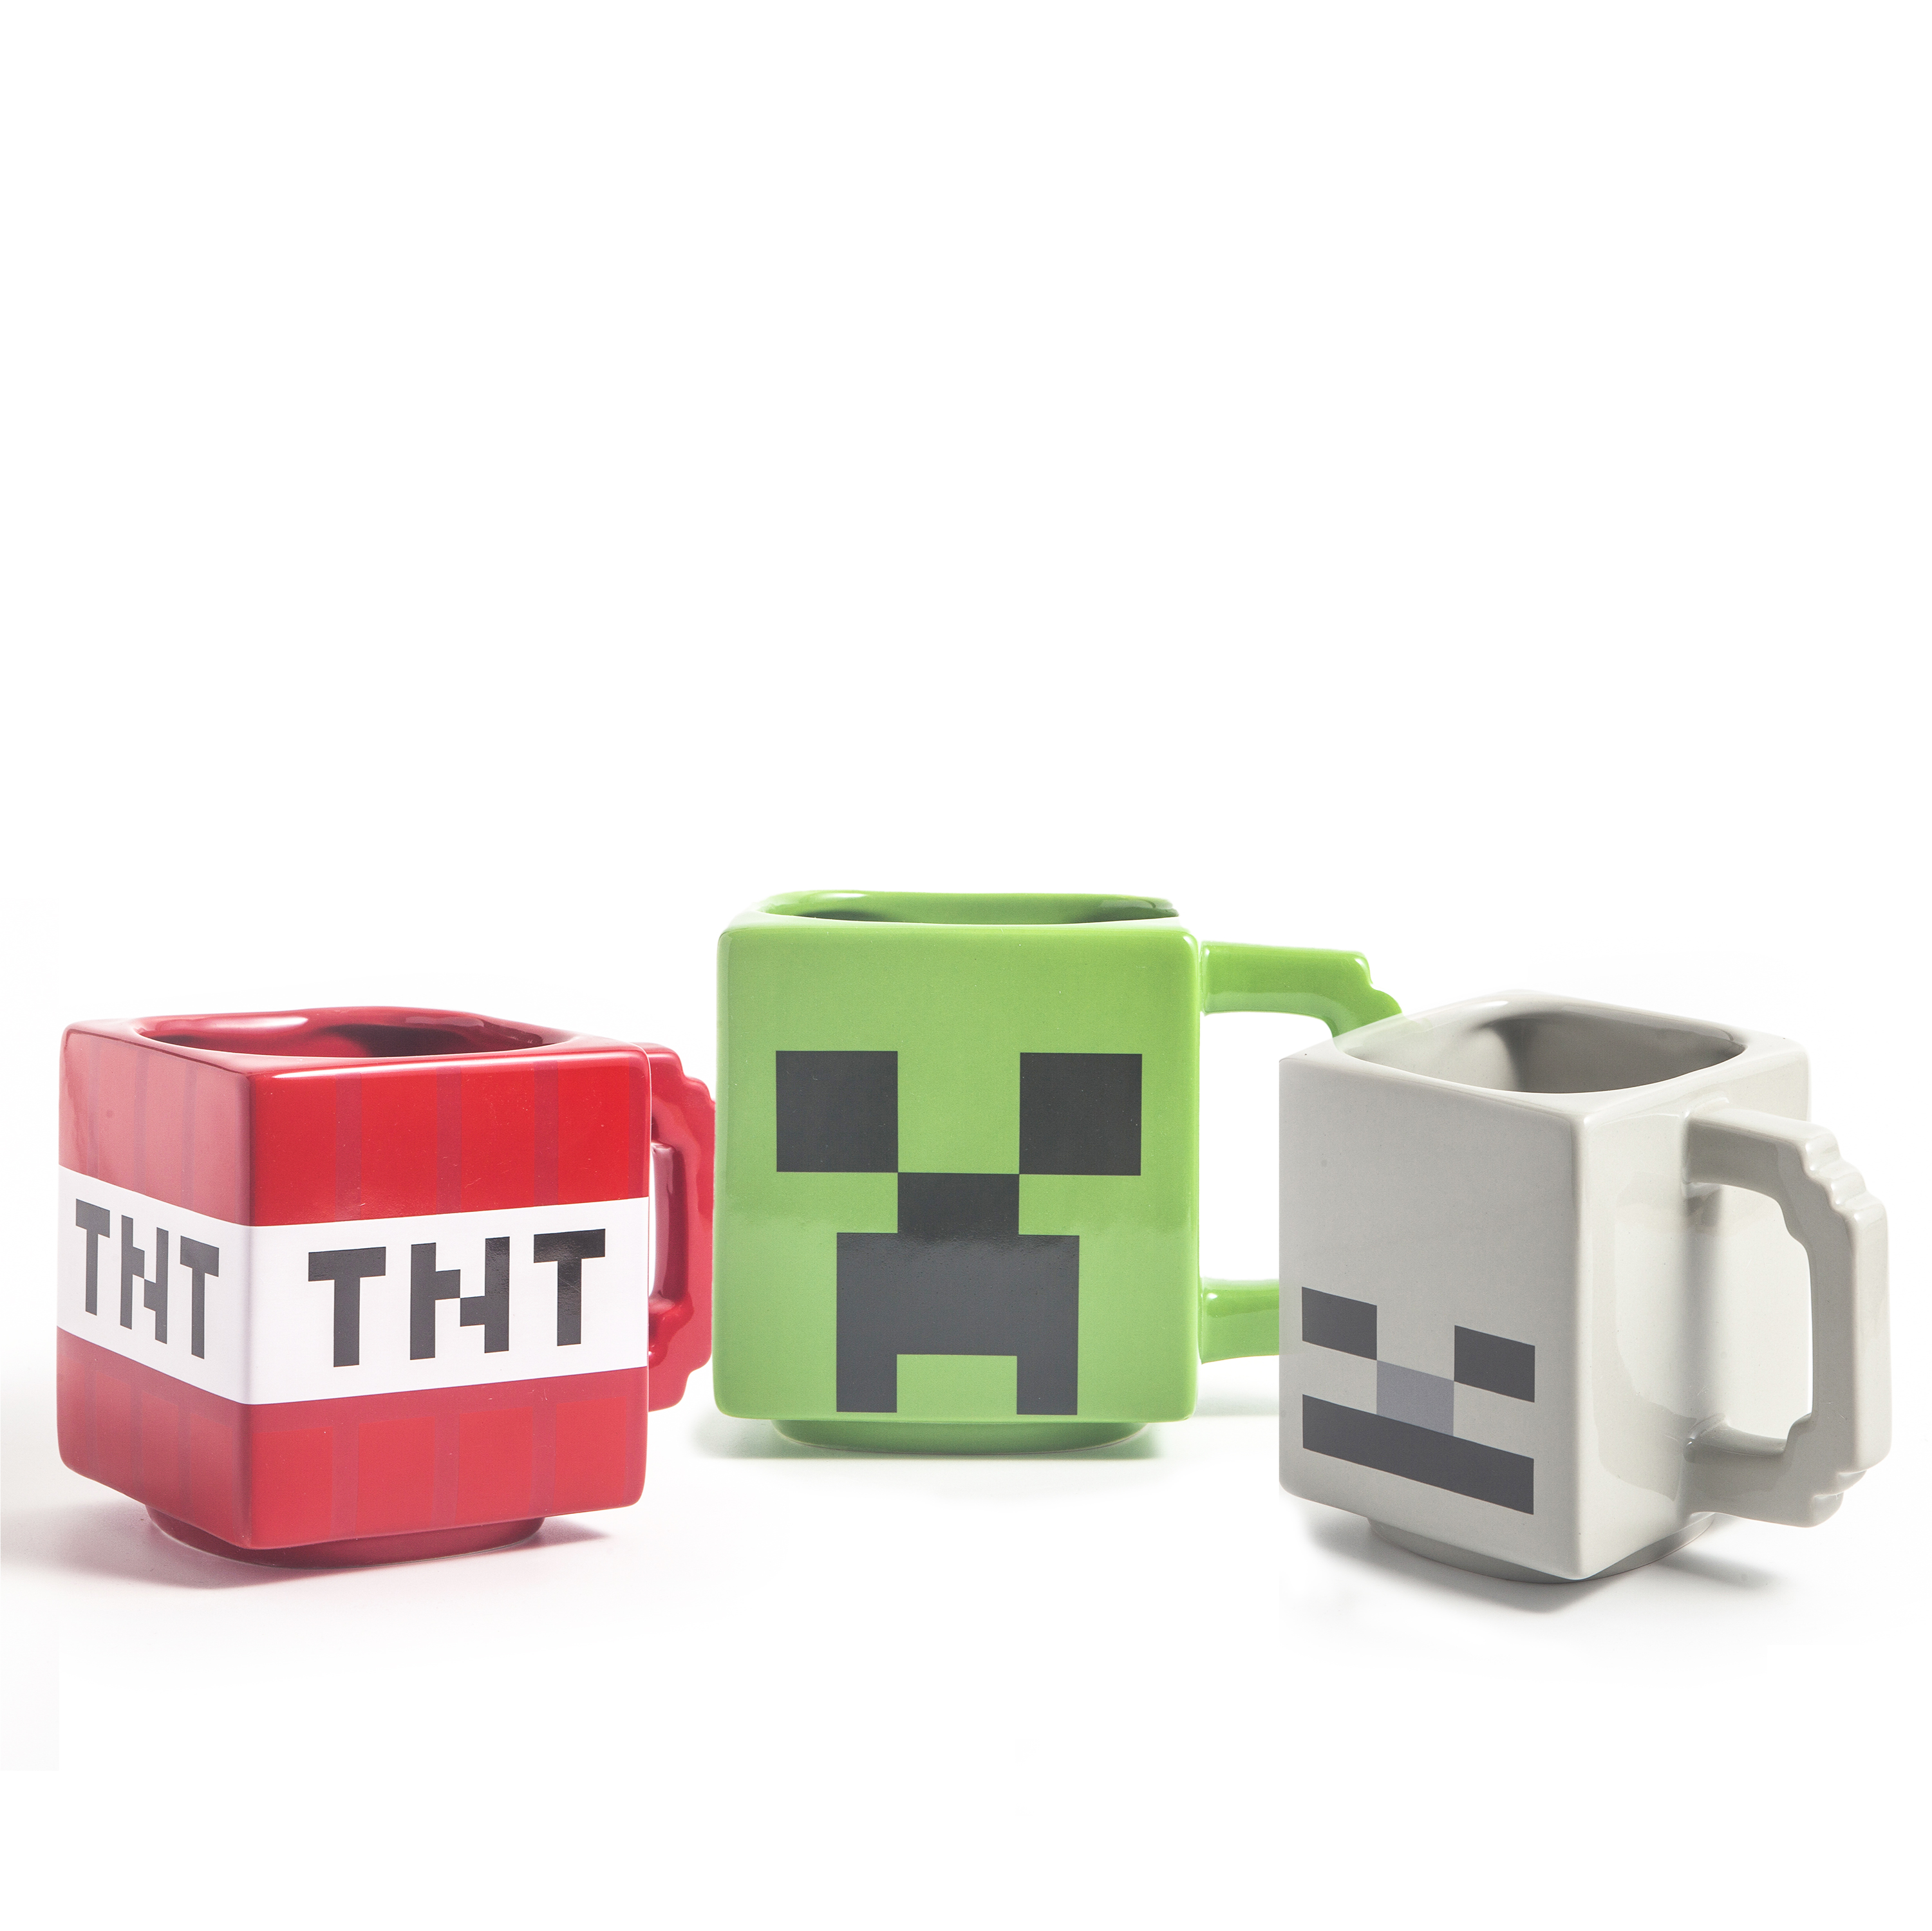 Minecraft Ceramic Coffee Mug, TNT, Skeletons and Creeper, 3-piece set slideshow image 1